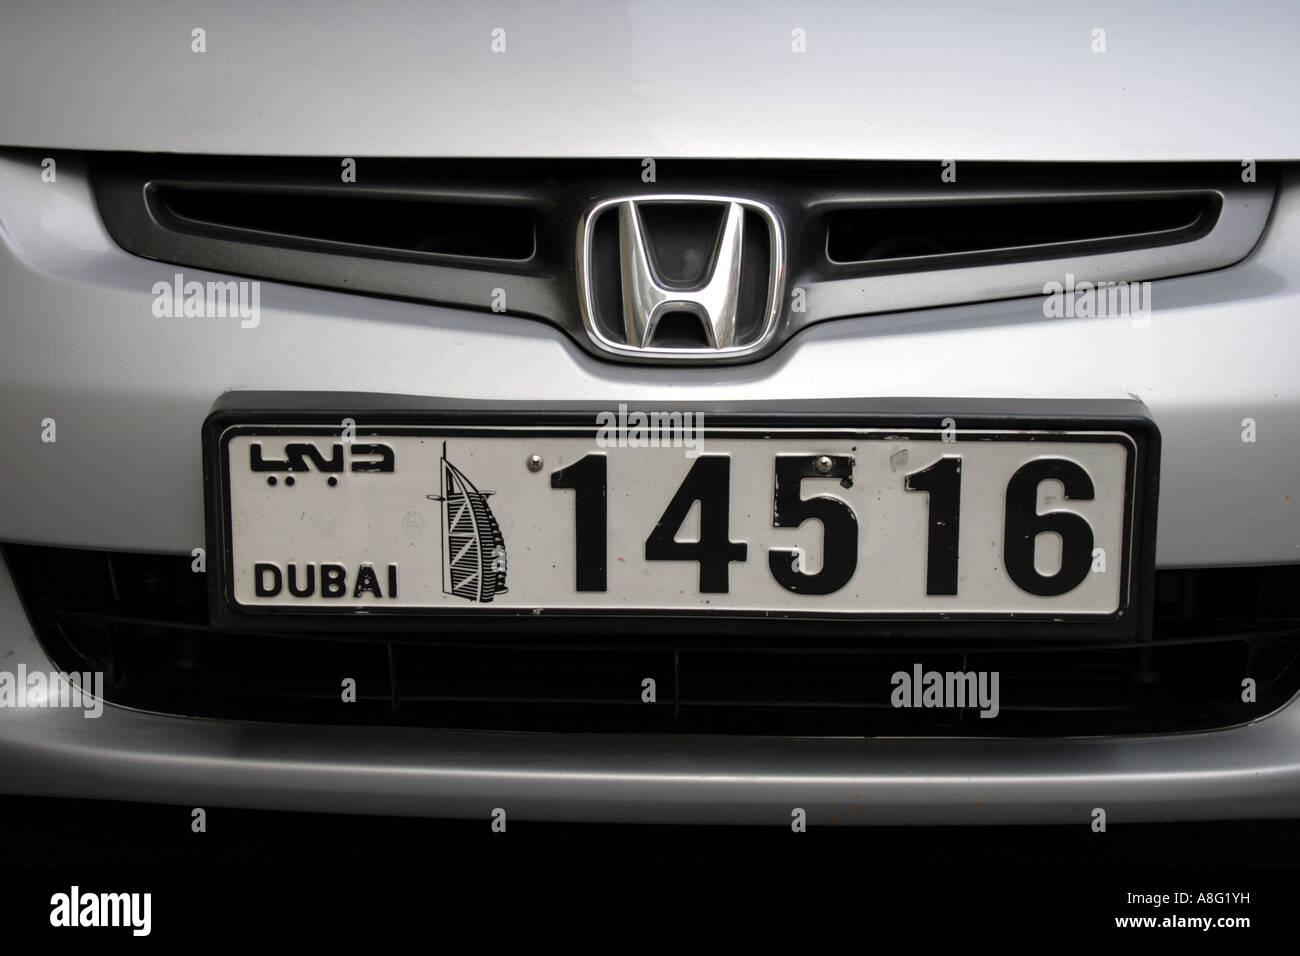 car with Dubai license plate with symbol Burj al Arab. Photo by Willy Matheisl Stock Photo